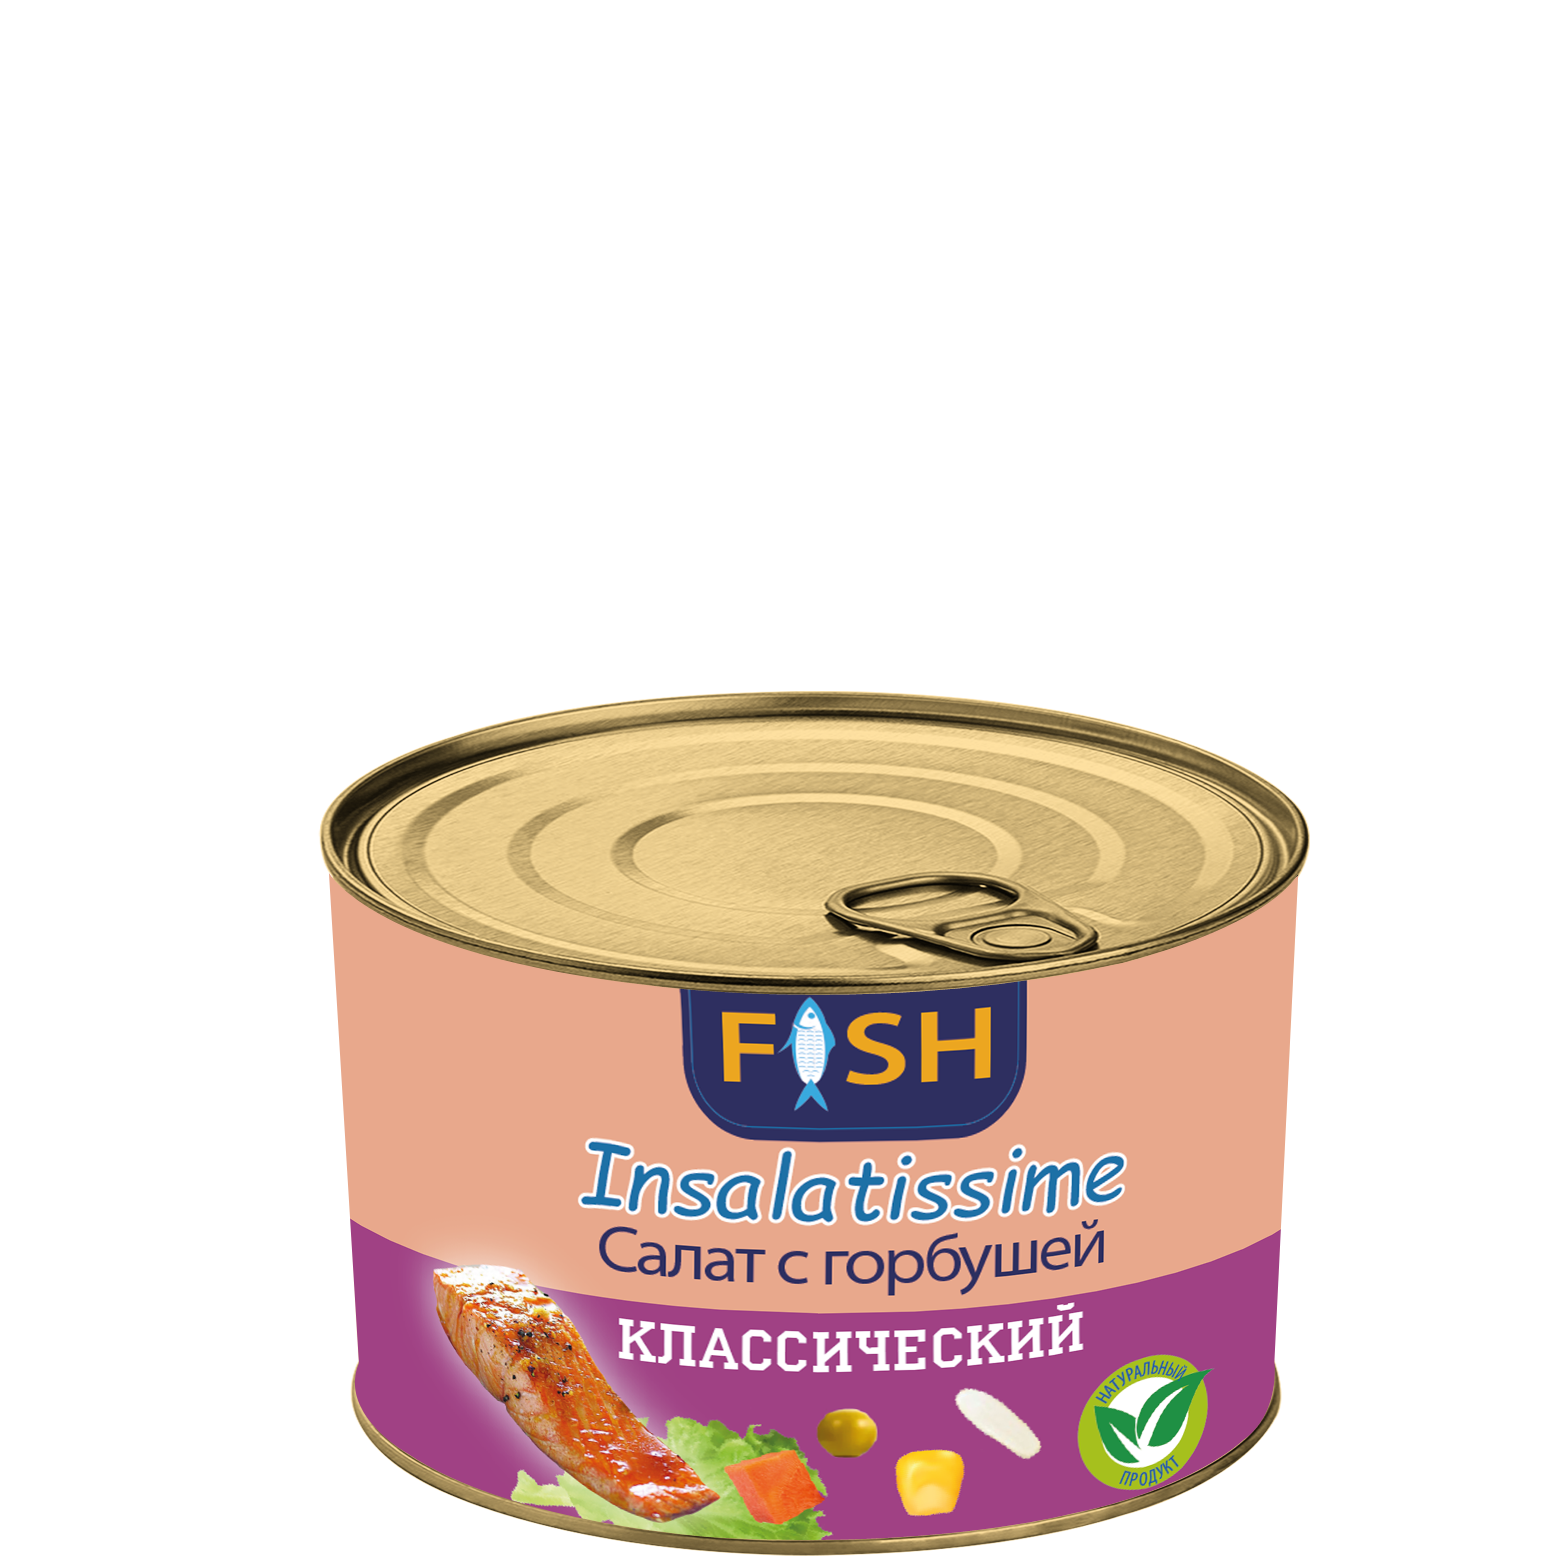 Салат с горбушей классический Fish Insalatissime